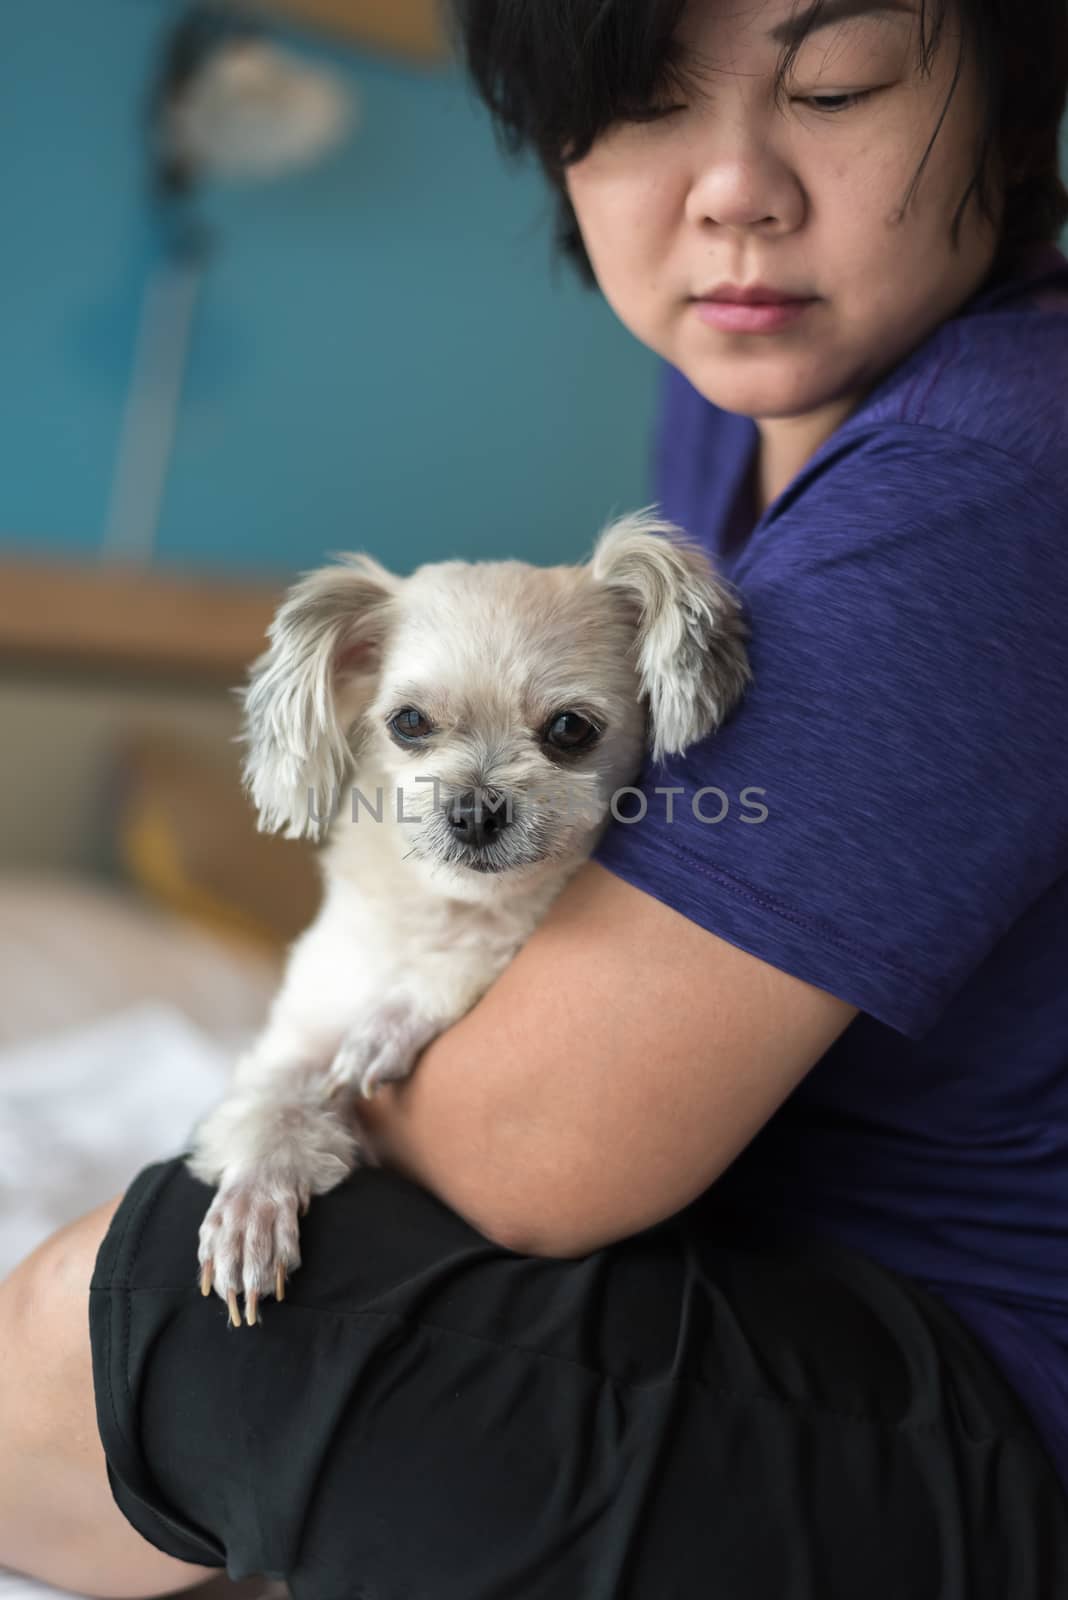 Asian woman hugging dog so cute on bed in bedroom by PongMoji